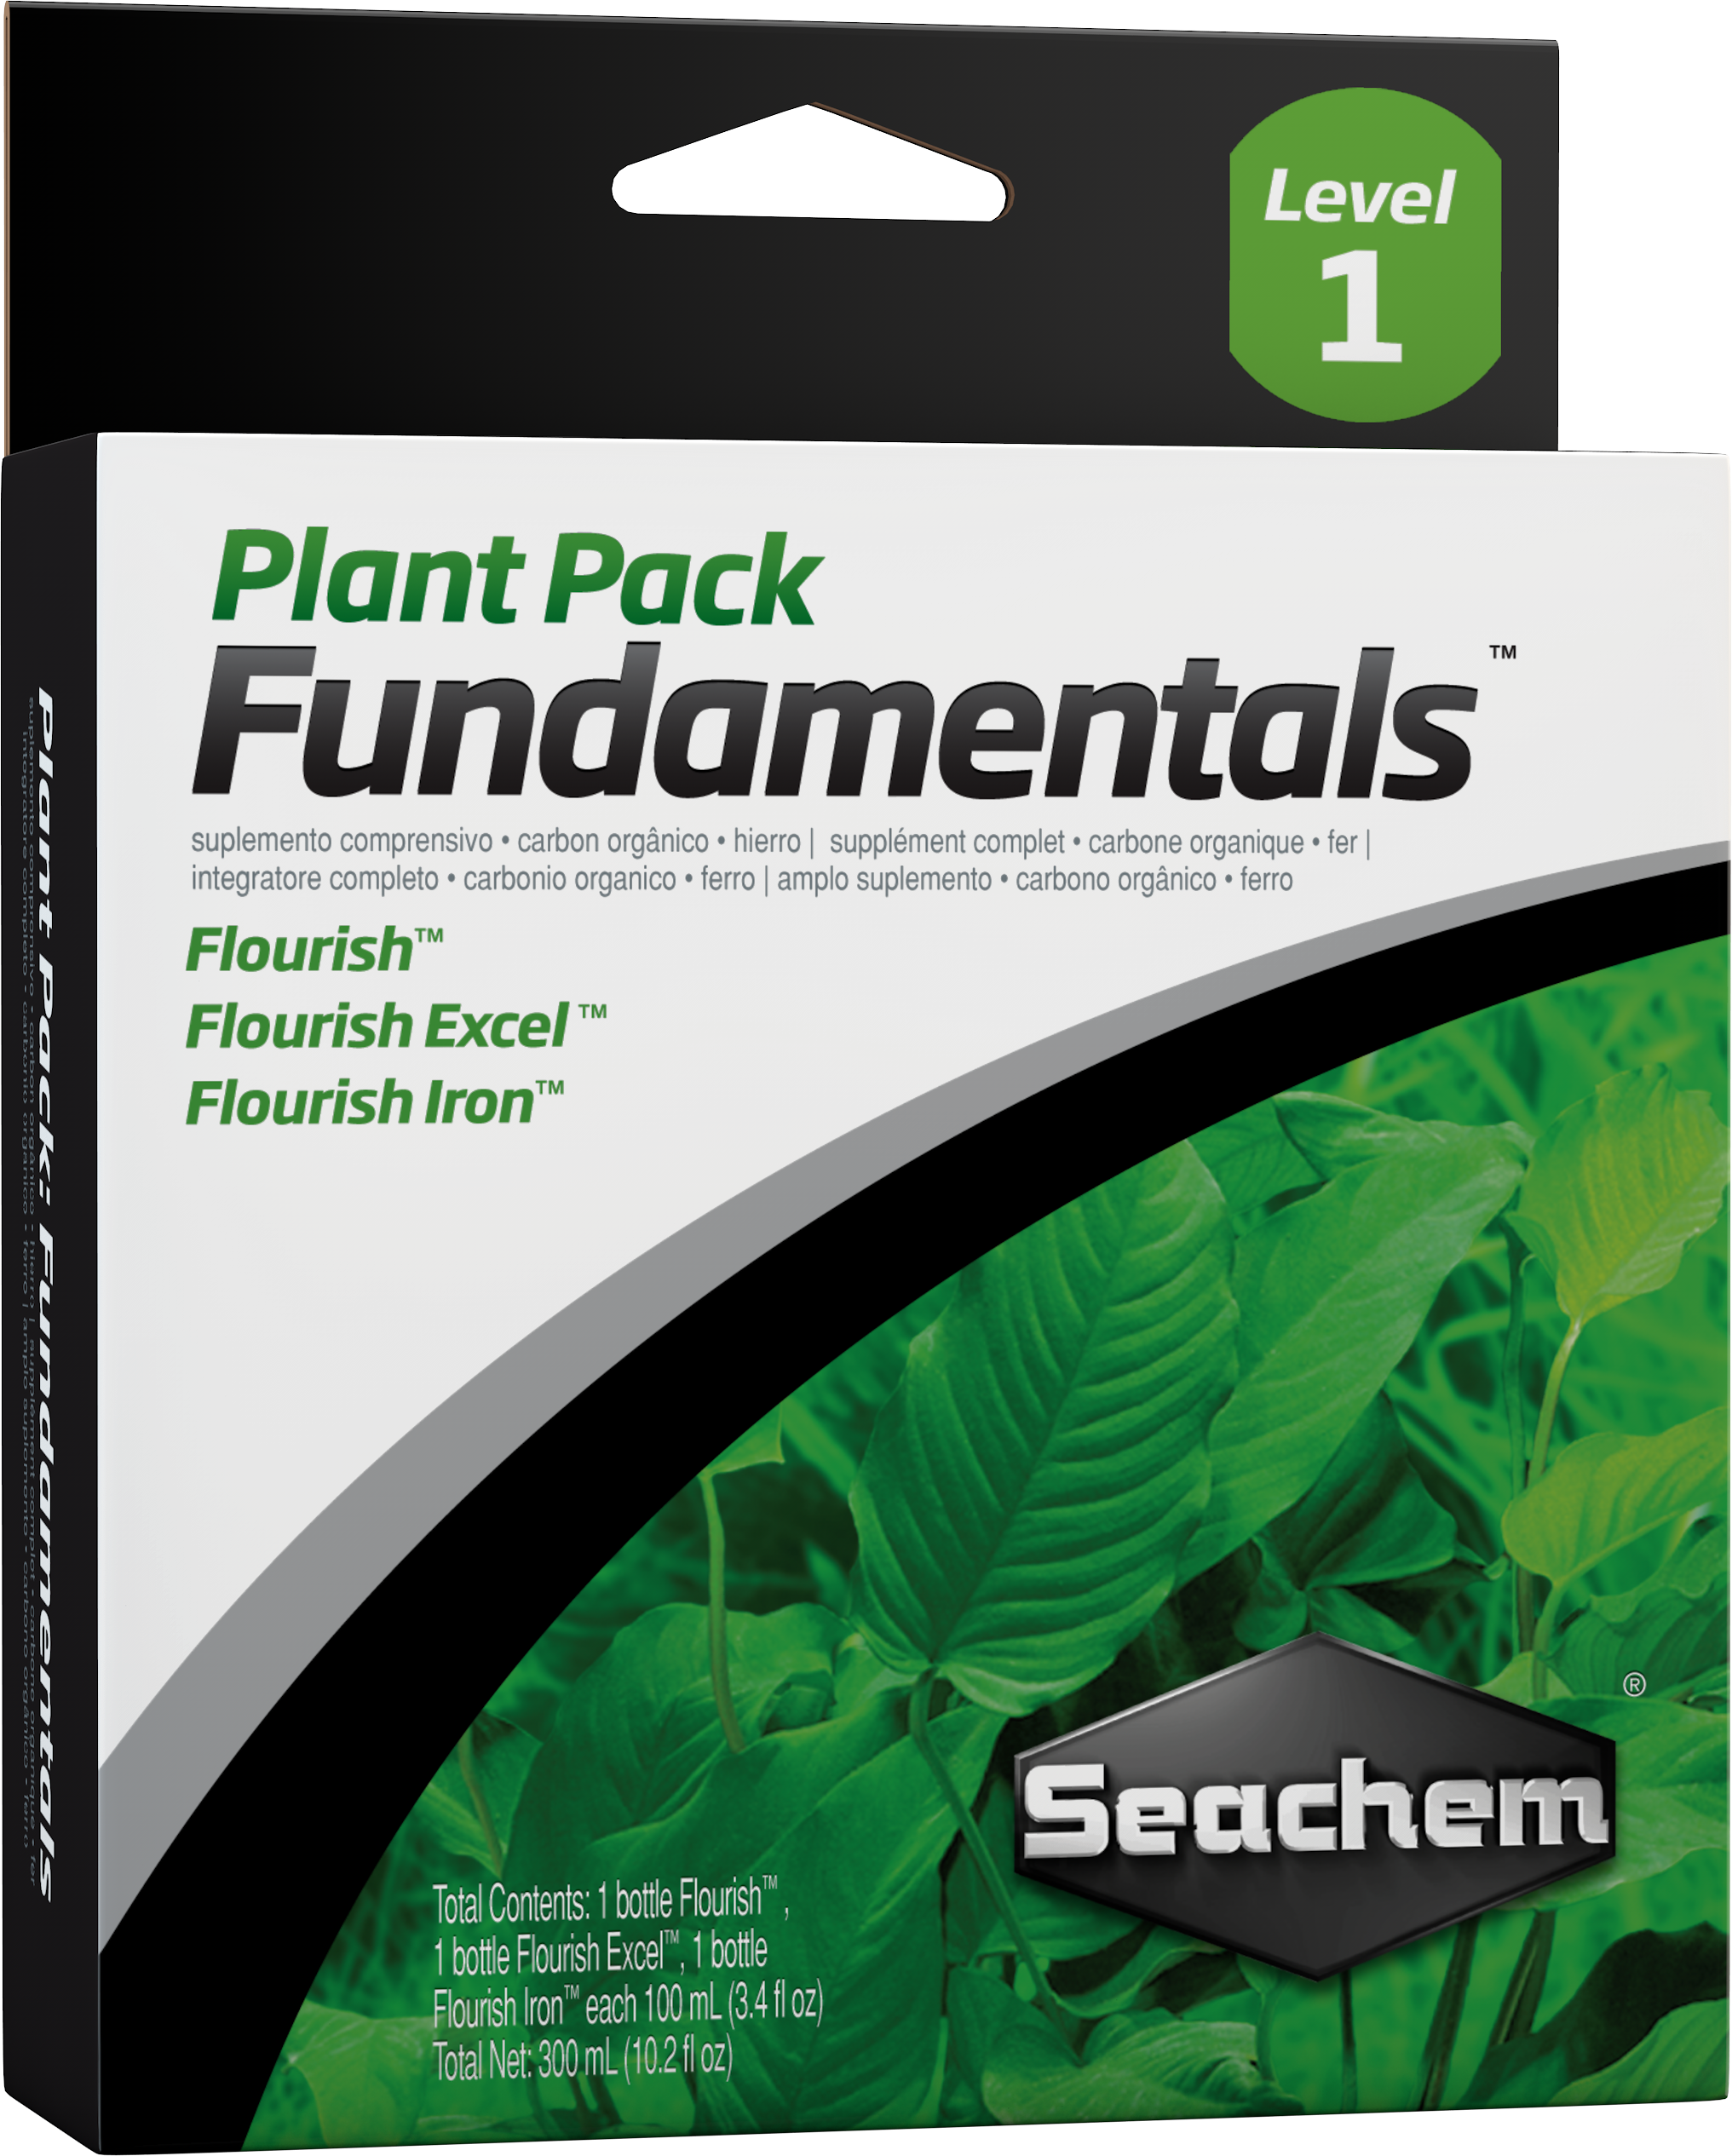 Seachem Plant Pack Fundamentals (3 pack) - CLOSE TO EXPIRATION